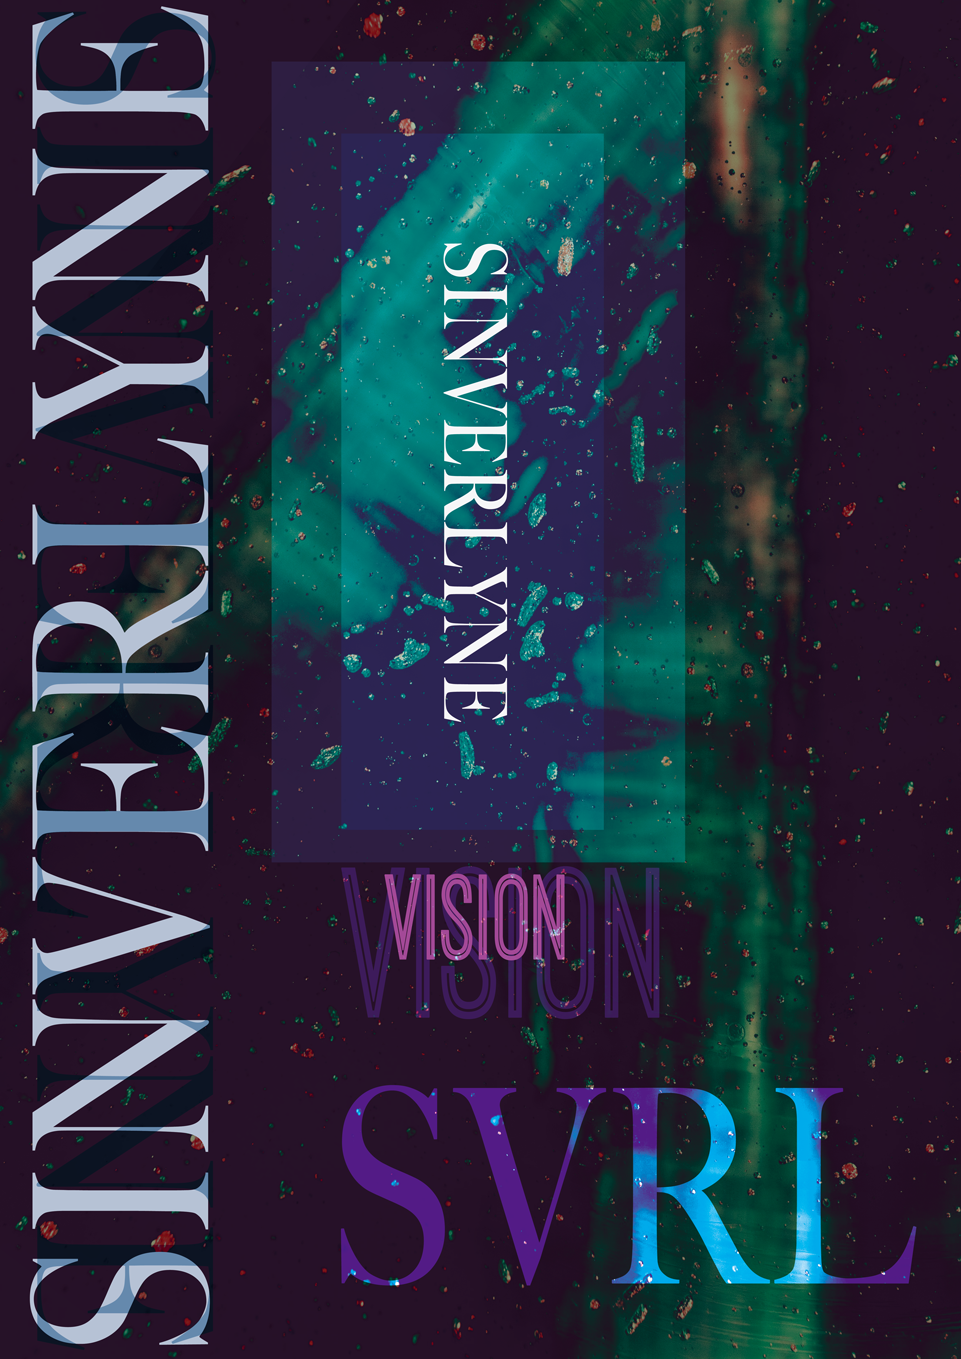 VISION 4 SINVERLYNE